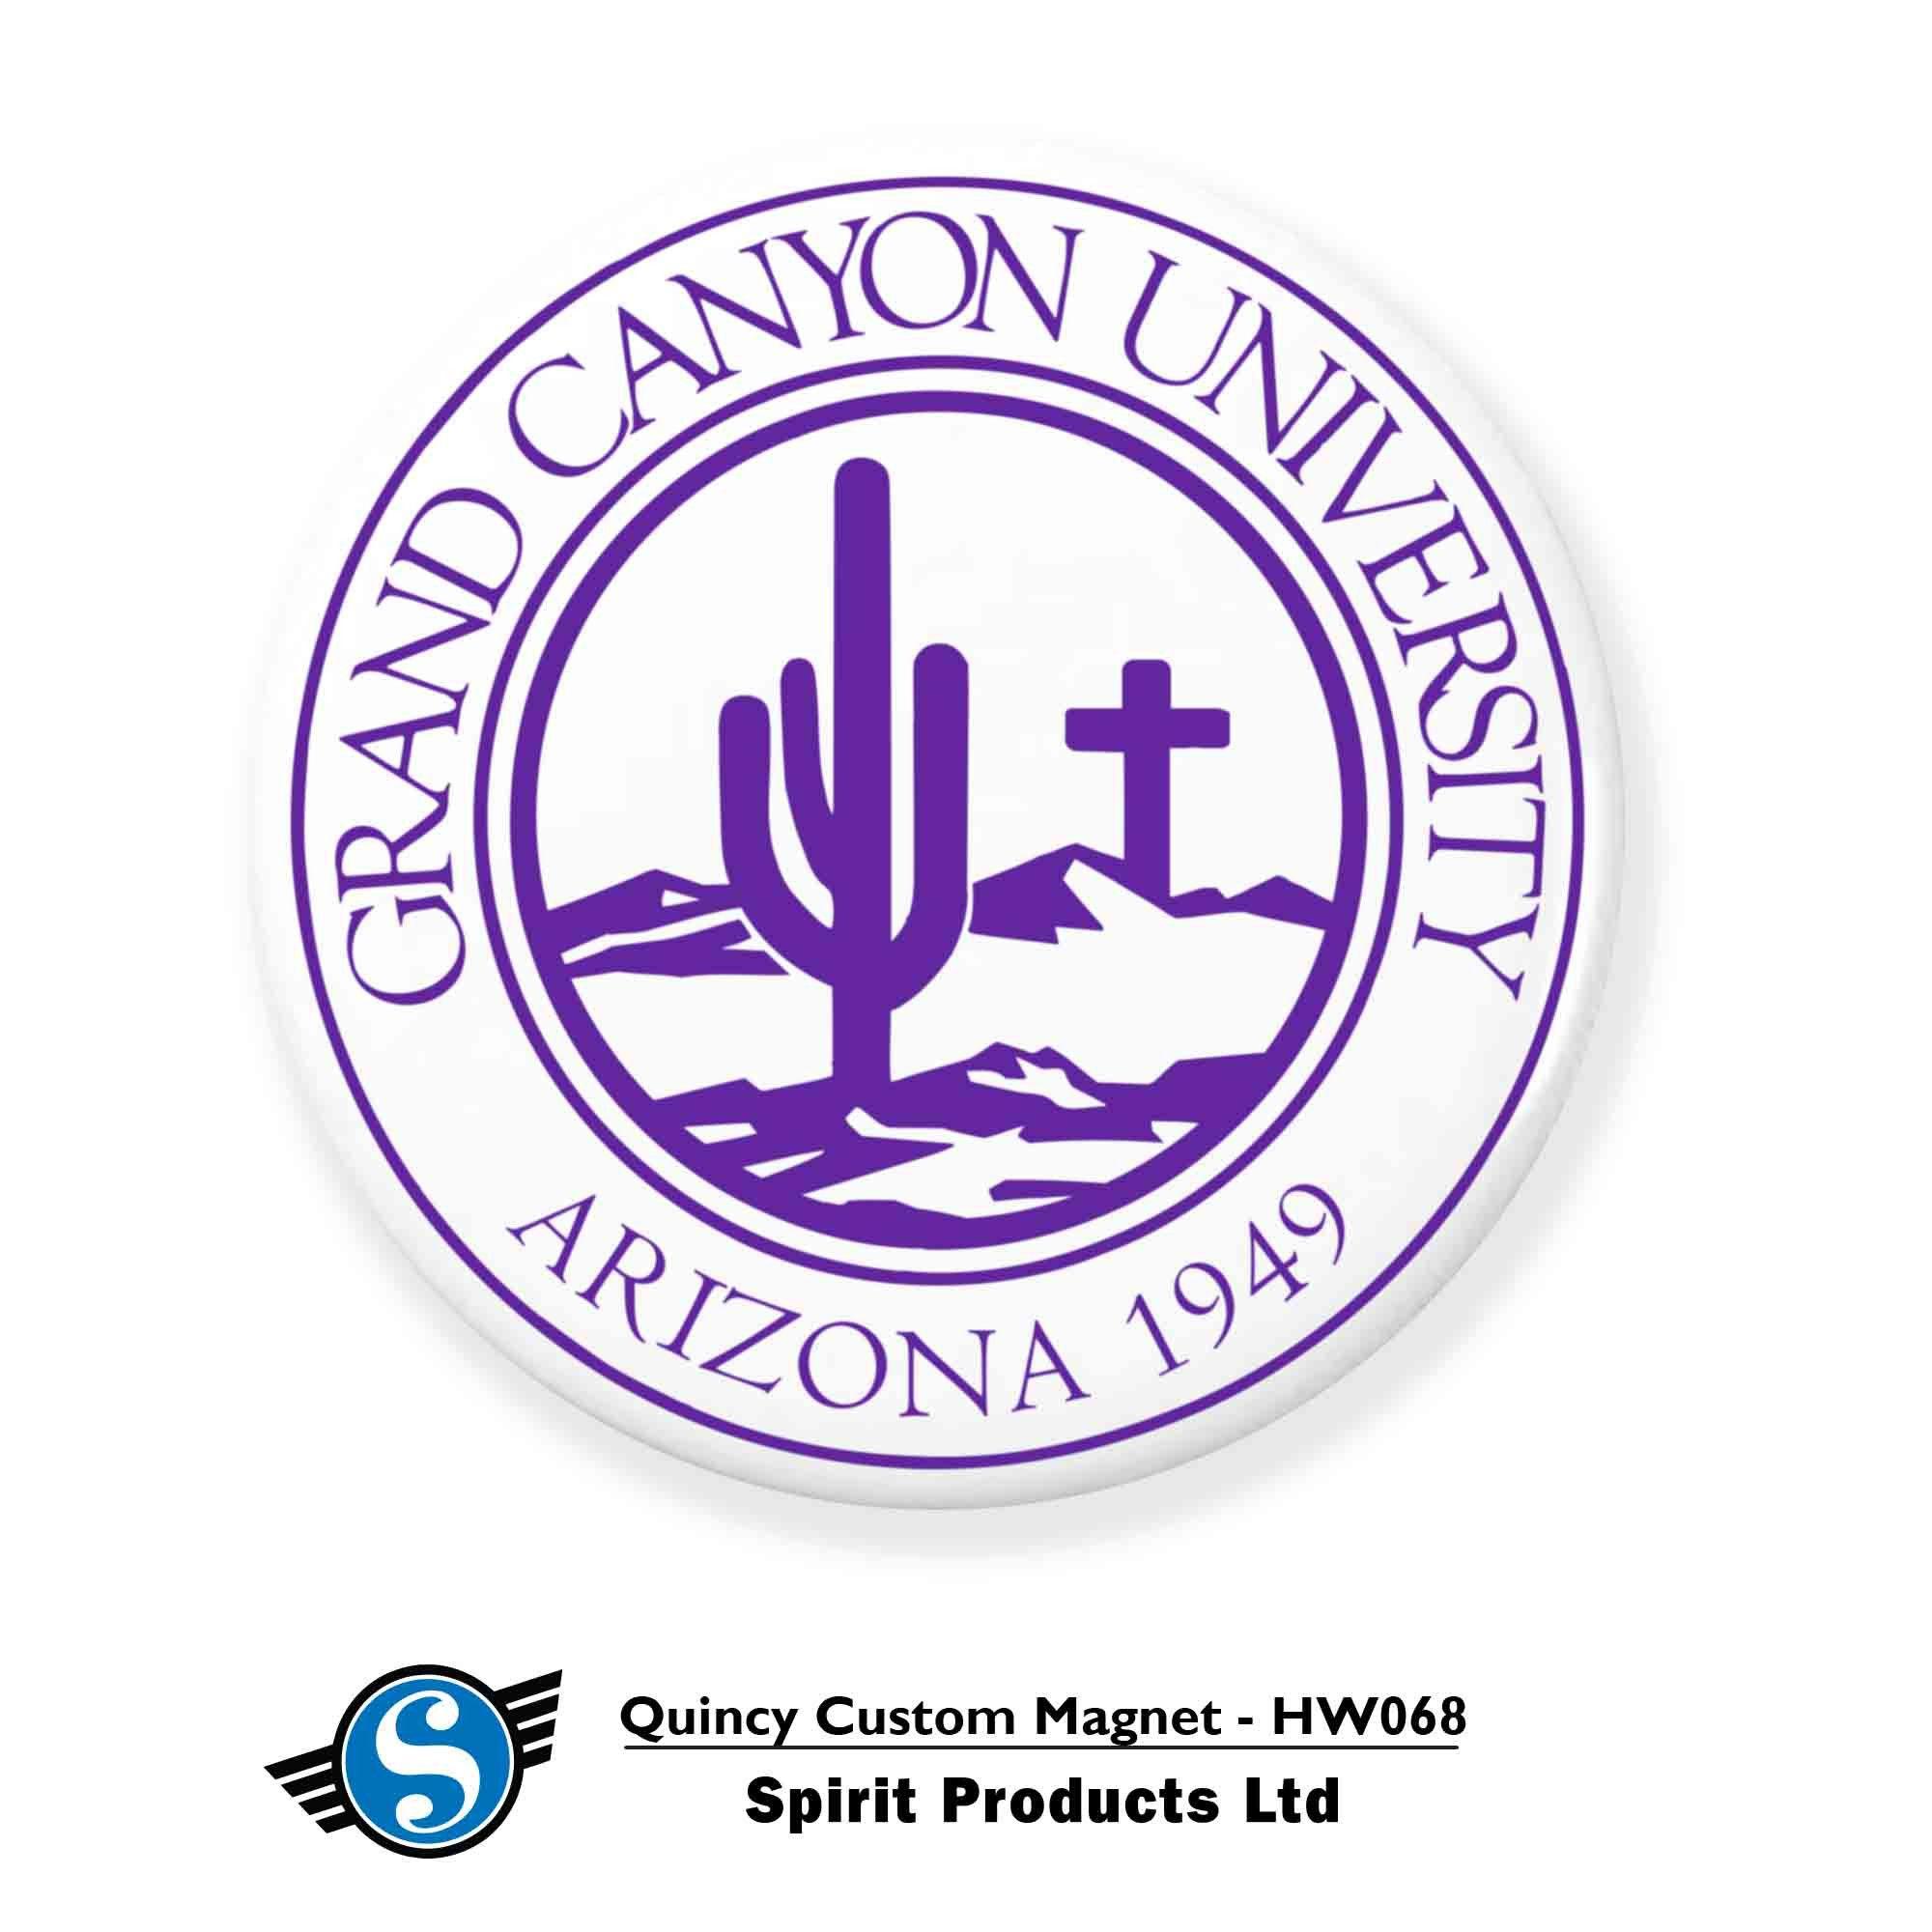 Grand Canyon Circle Logo - Grand Canyon University Seal Magnet